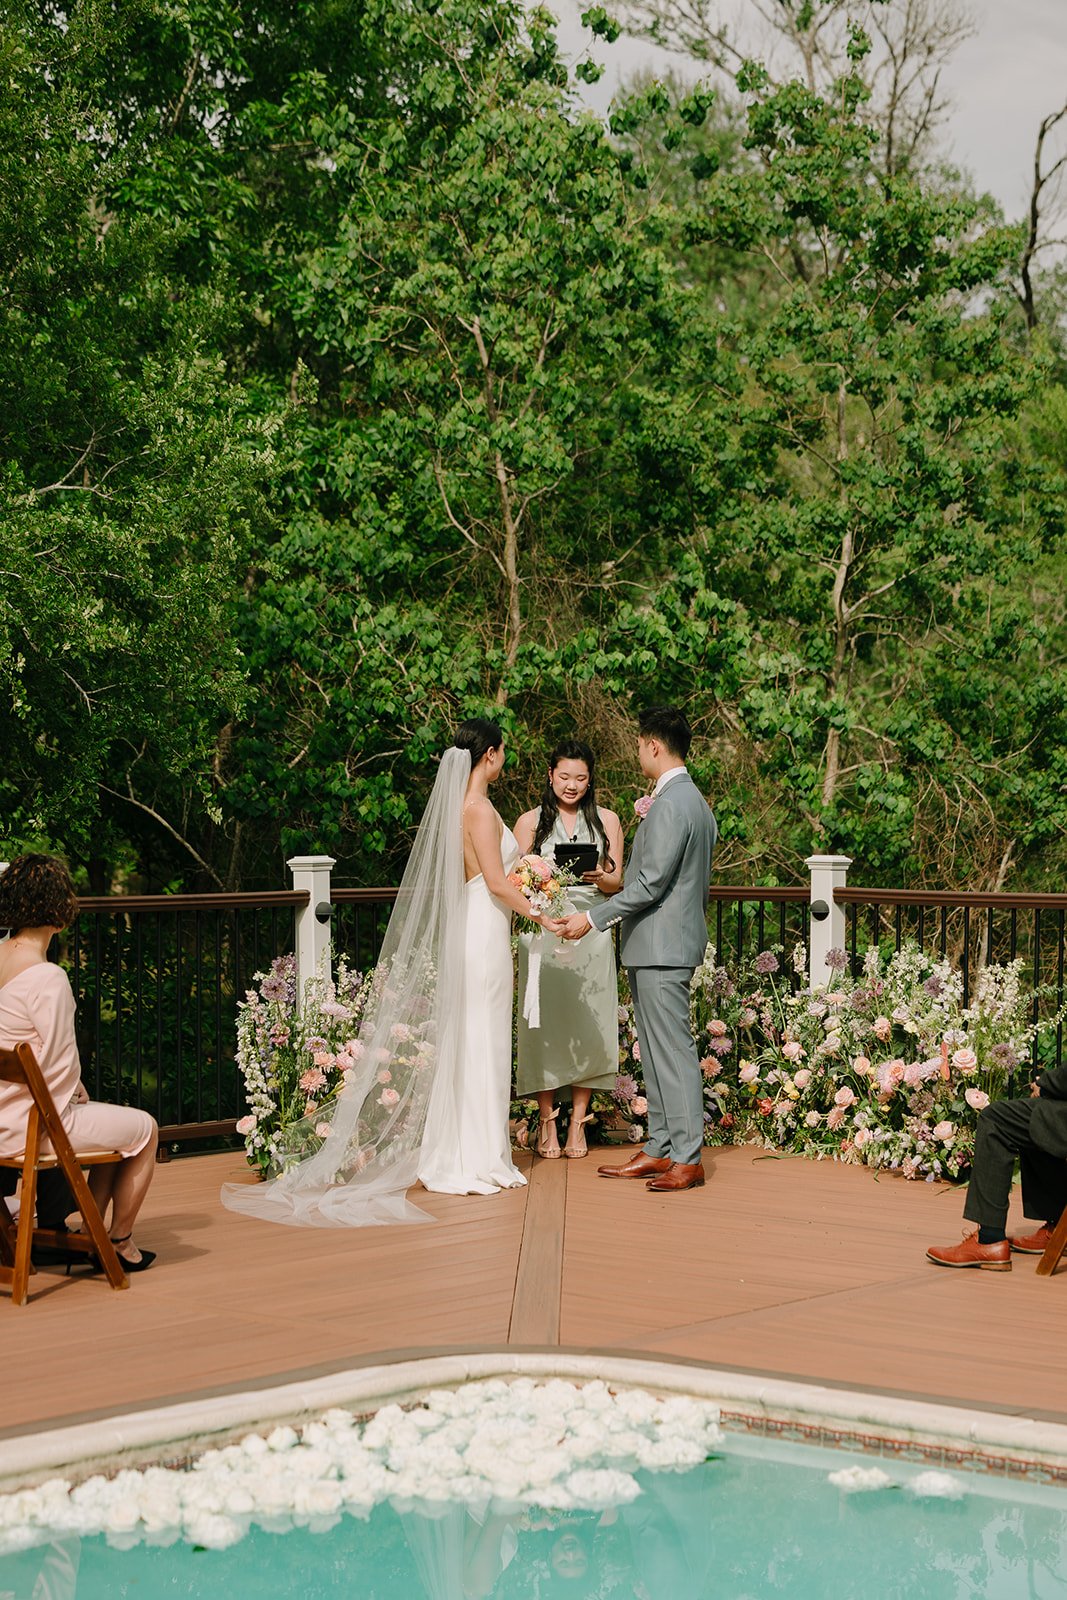 Intimate Backyard Wedding in Houston - Natalie Nicole Photo - Houston Wedding Photographer (53).jpg